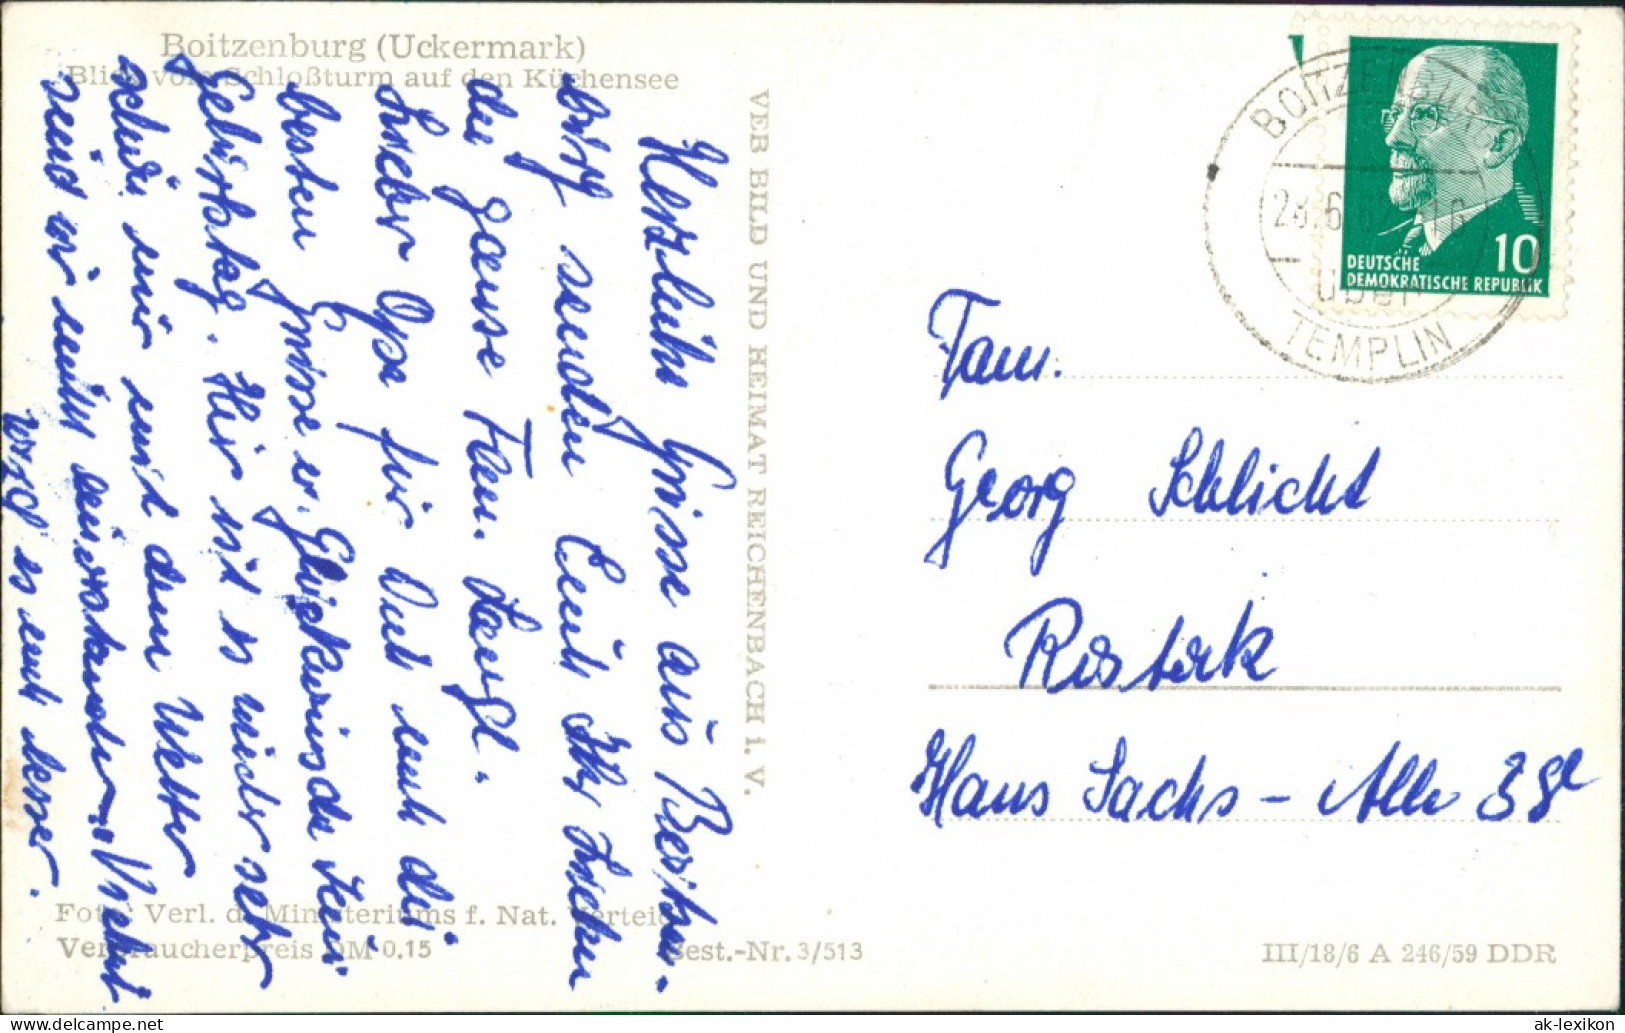 Boitzenburger Land Blick Vom Schloß Turm A.d. Küchensee DDR Postkarte 1962/1959 - Boitzenburg